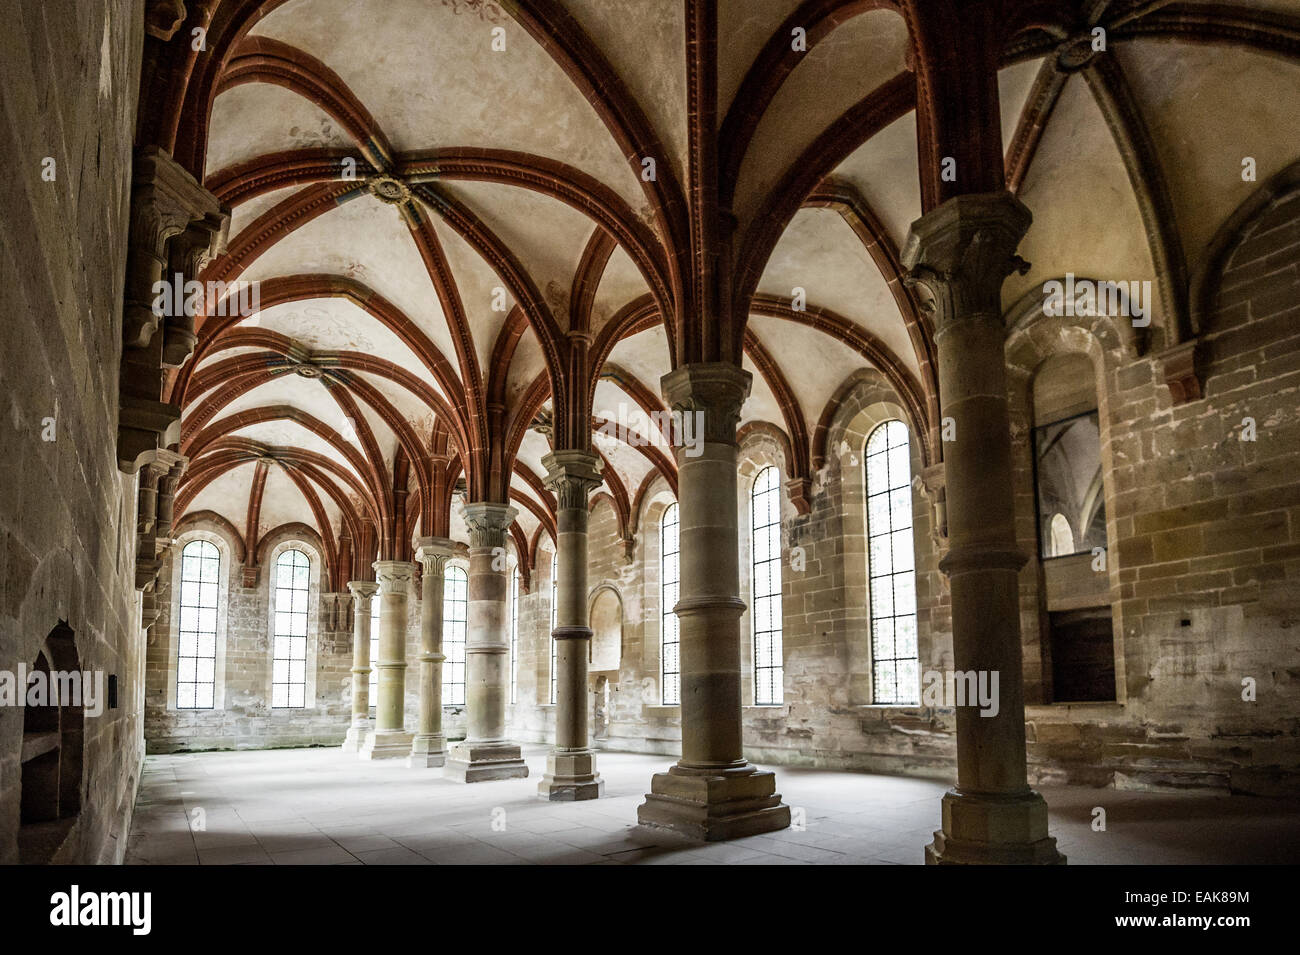 Kloster Maulbronn, ehemalige Zisterzienserabtei, UNESCO-Weltkulturerbe, Maulbronn, Baden-Württemberg, Deutschland Stockfoto